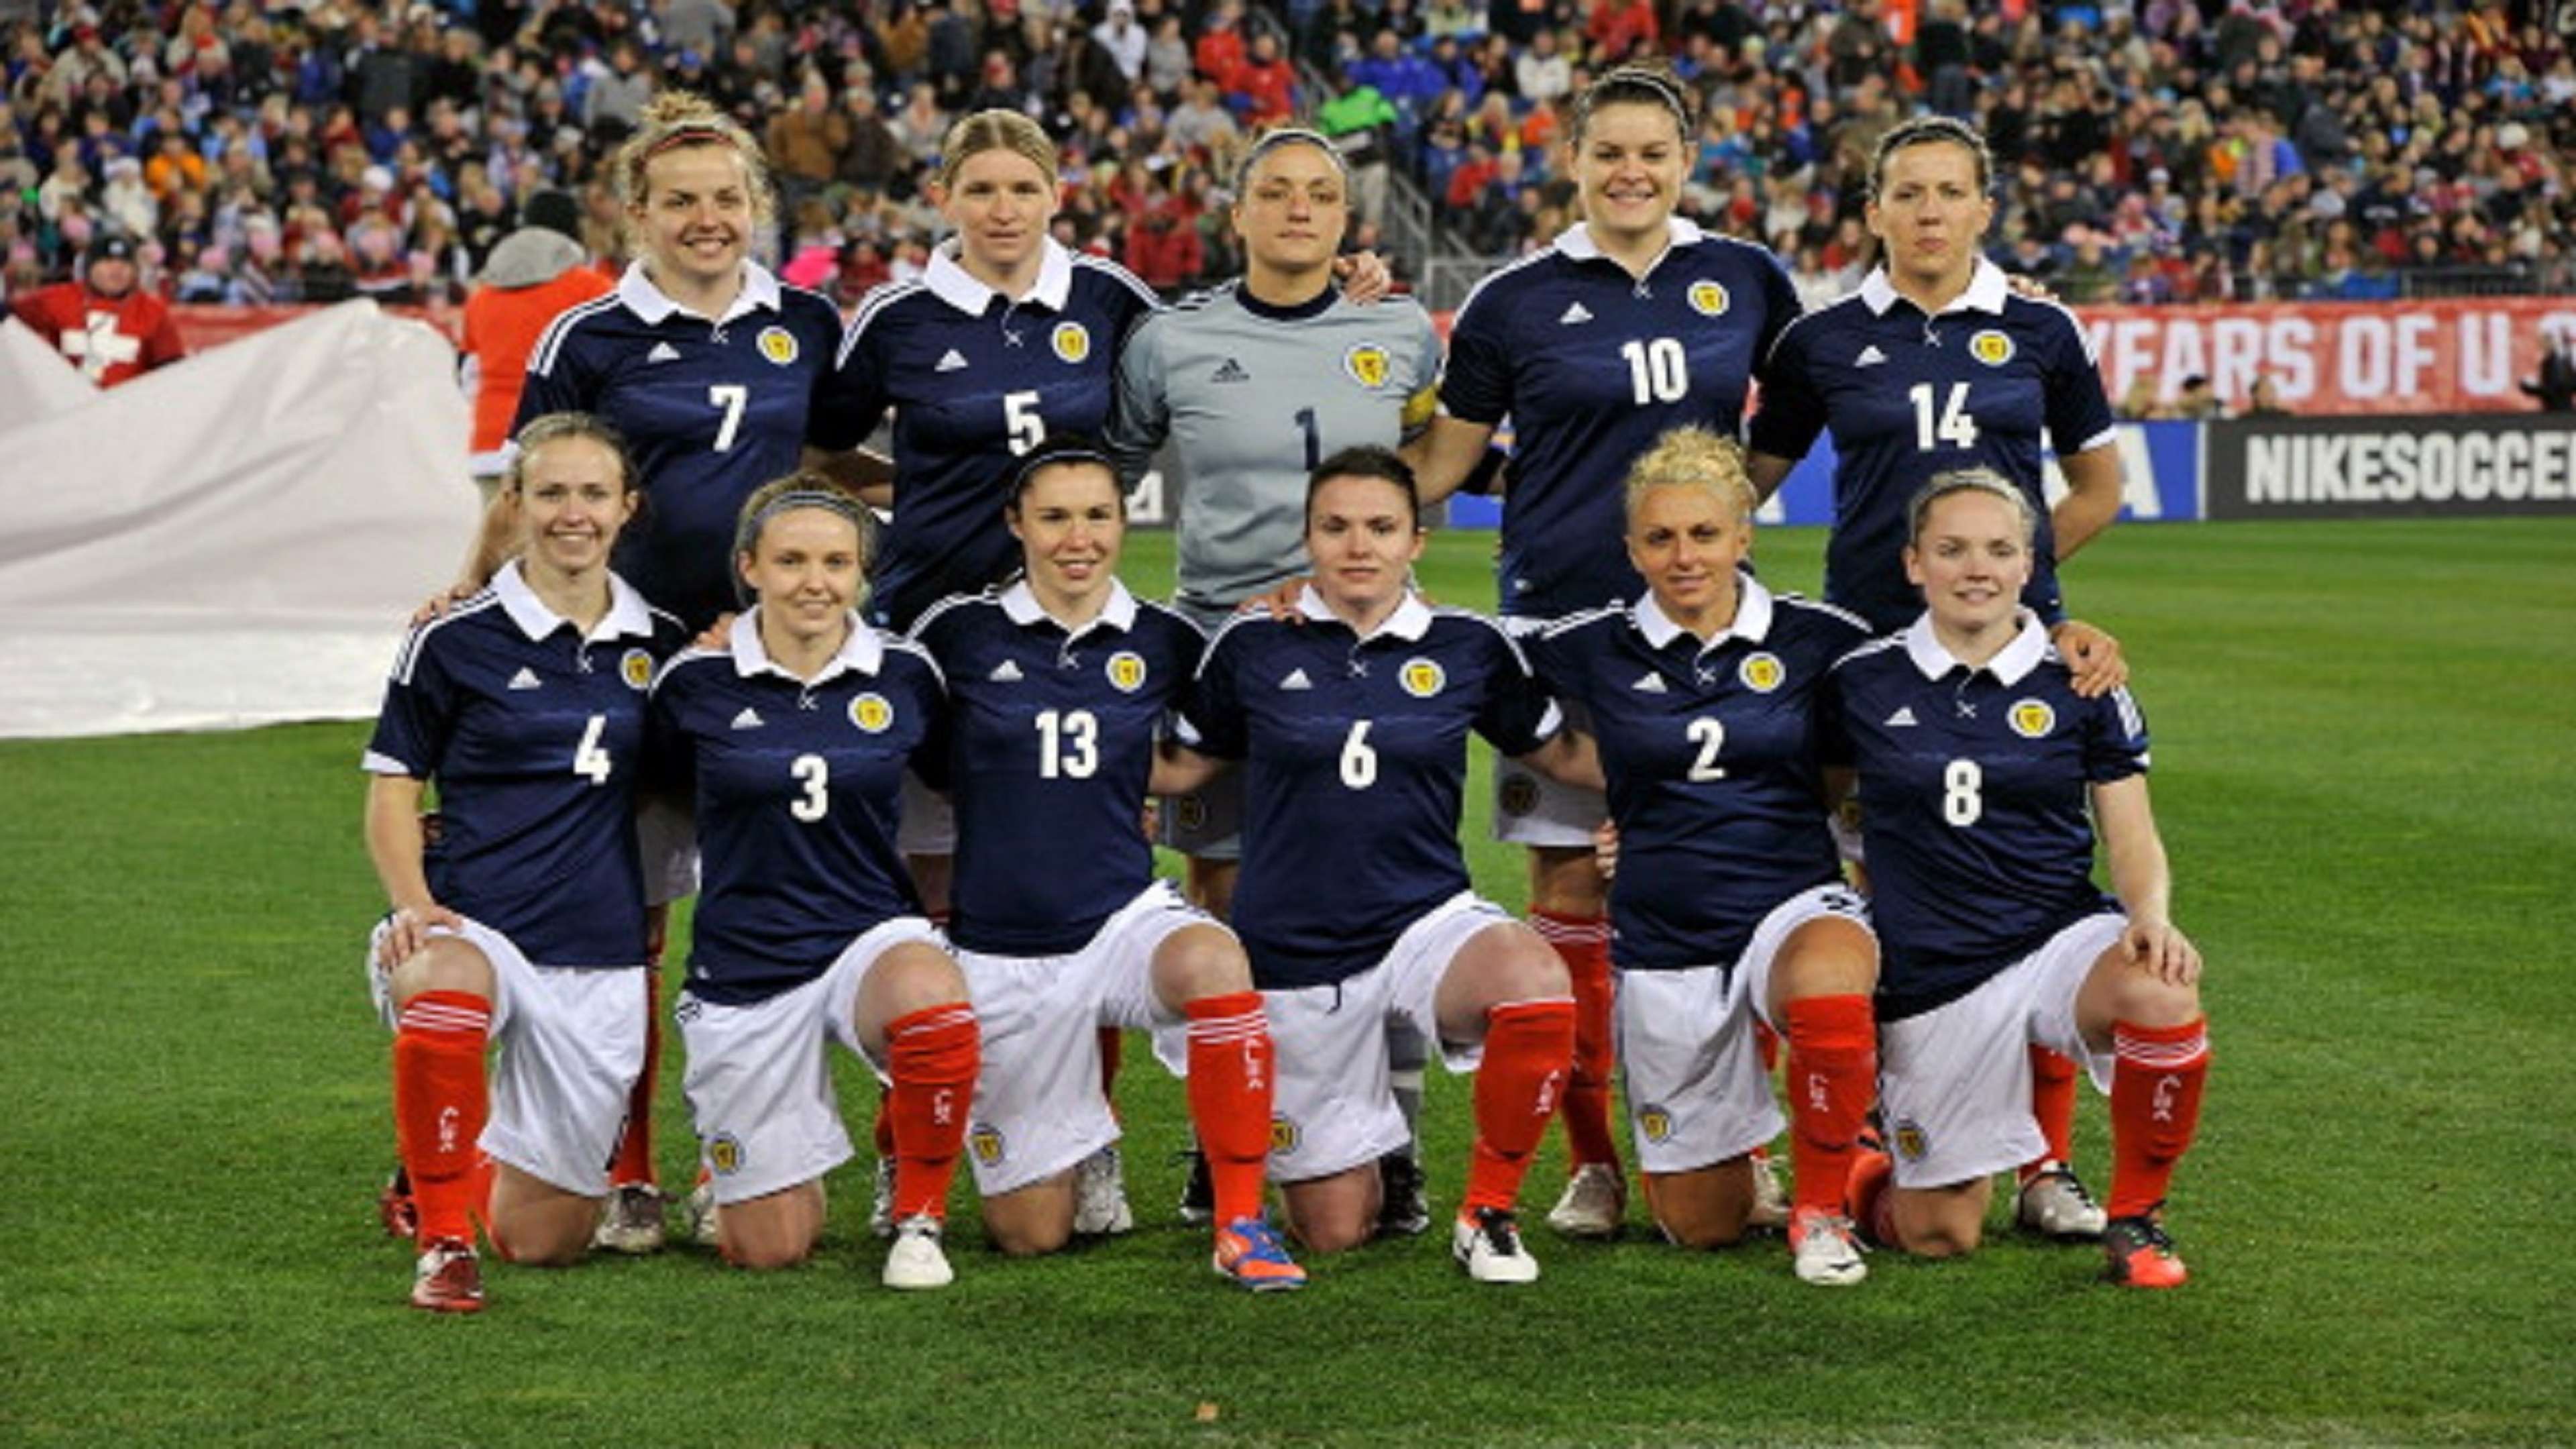 Scotland Women's National team